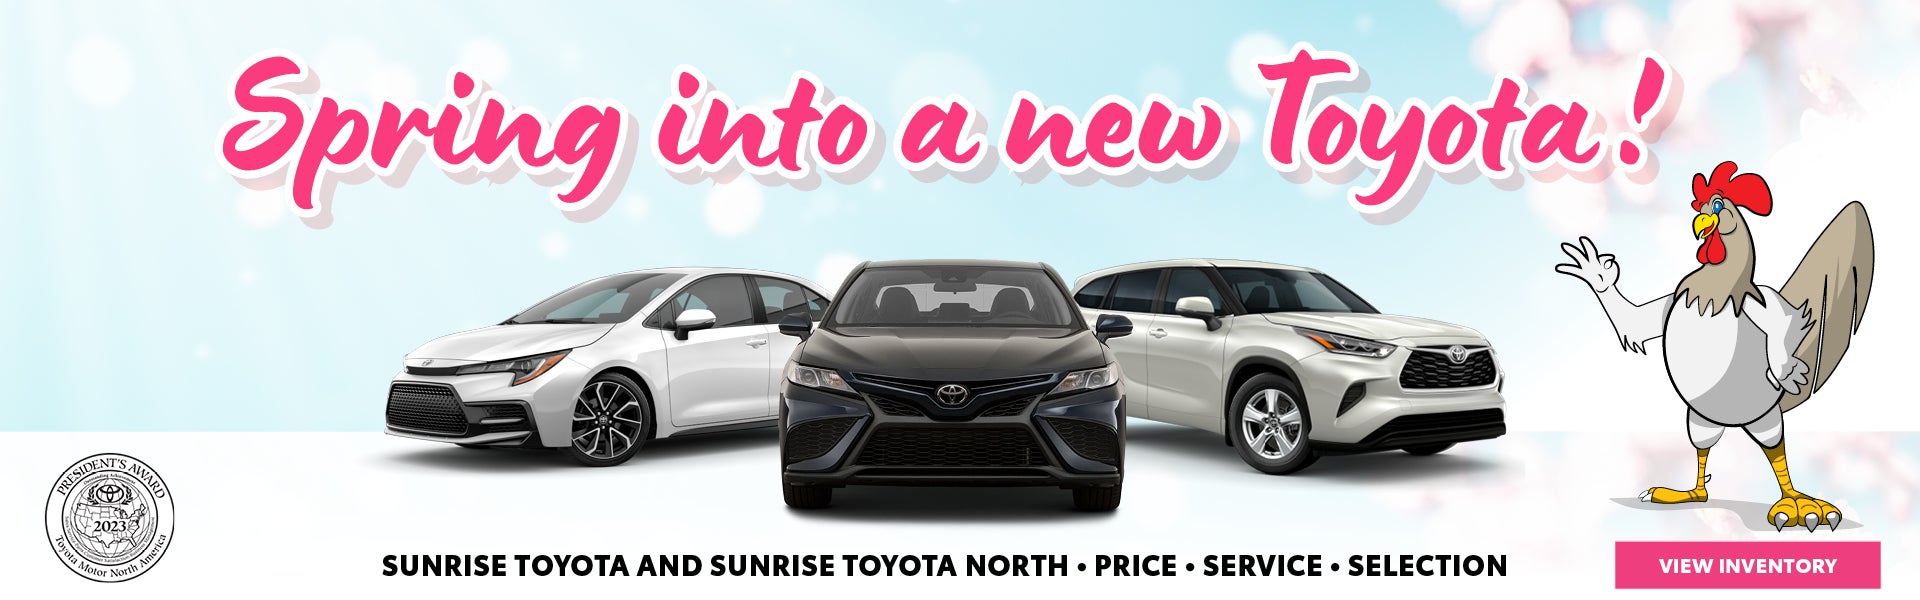 New Toyota Vehicles